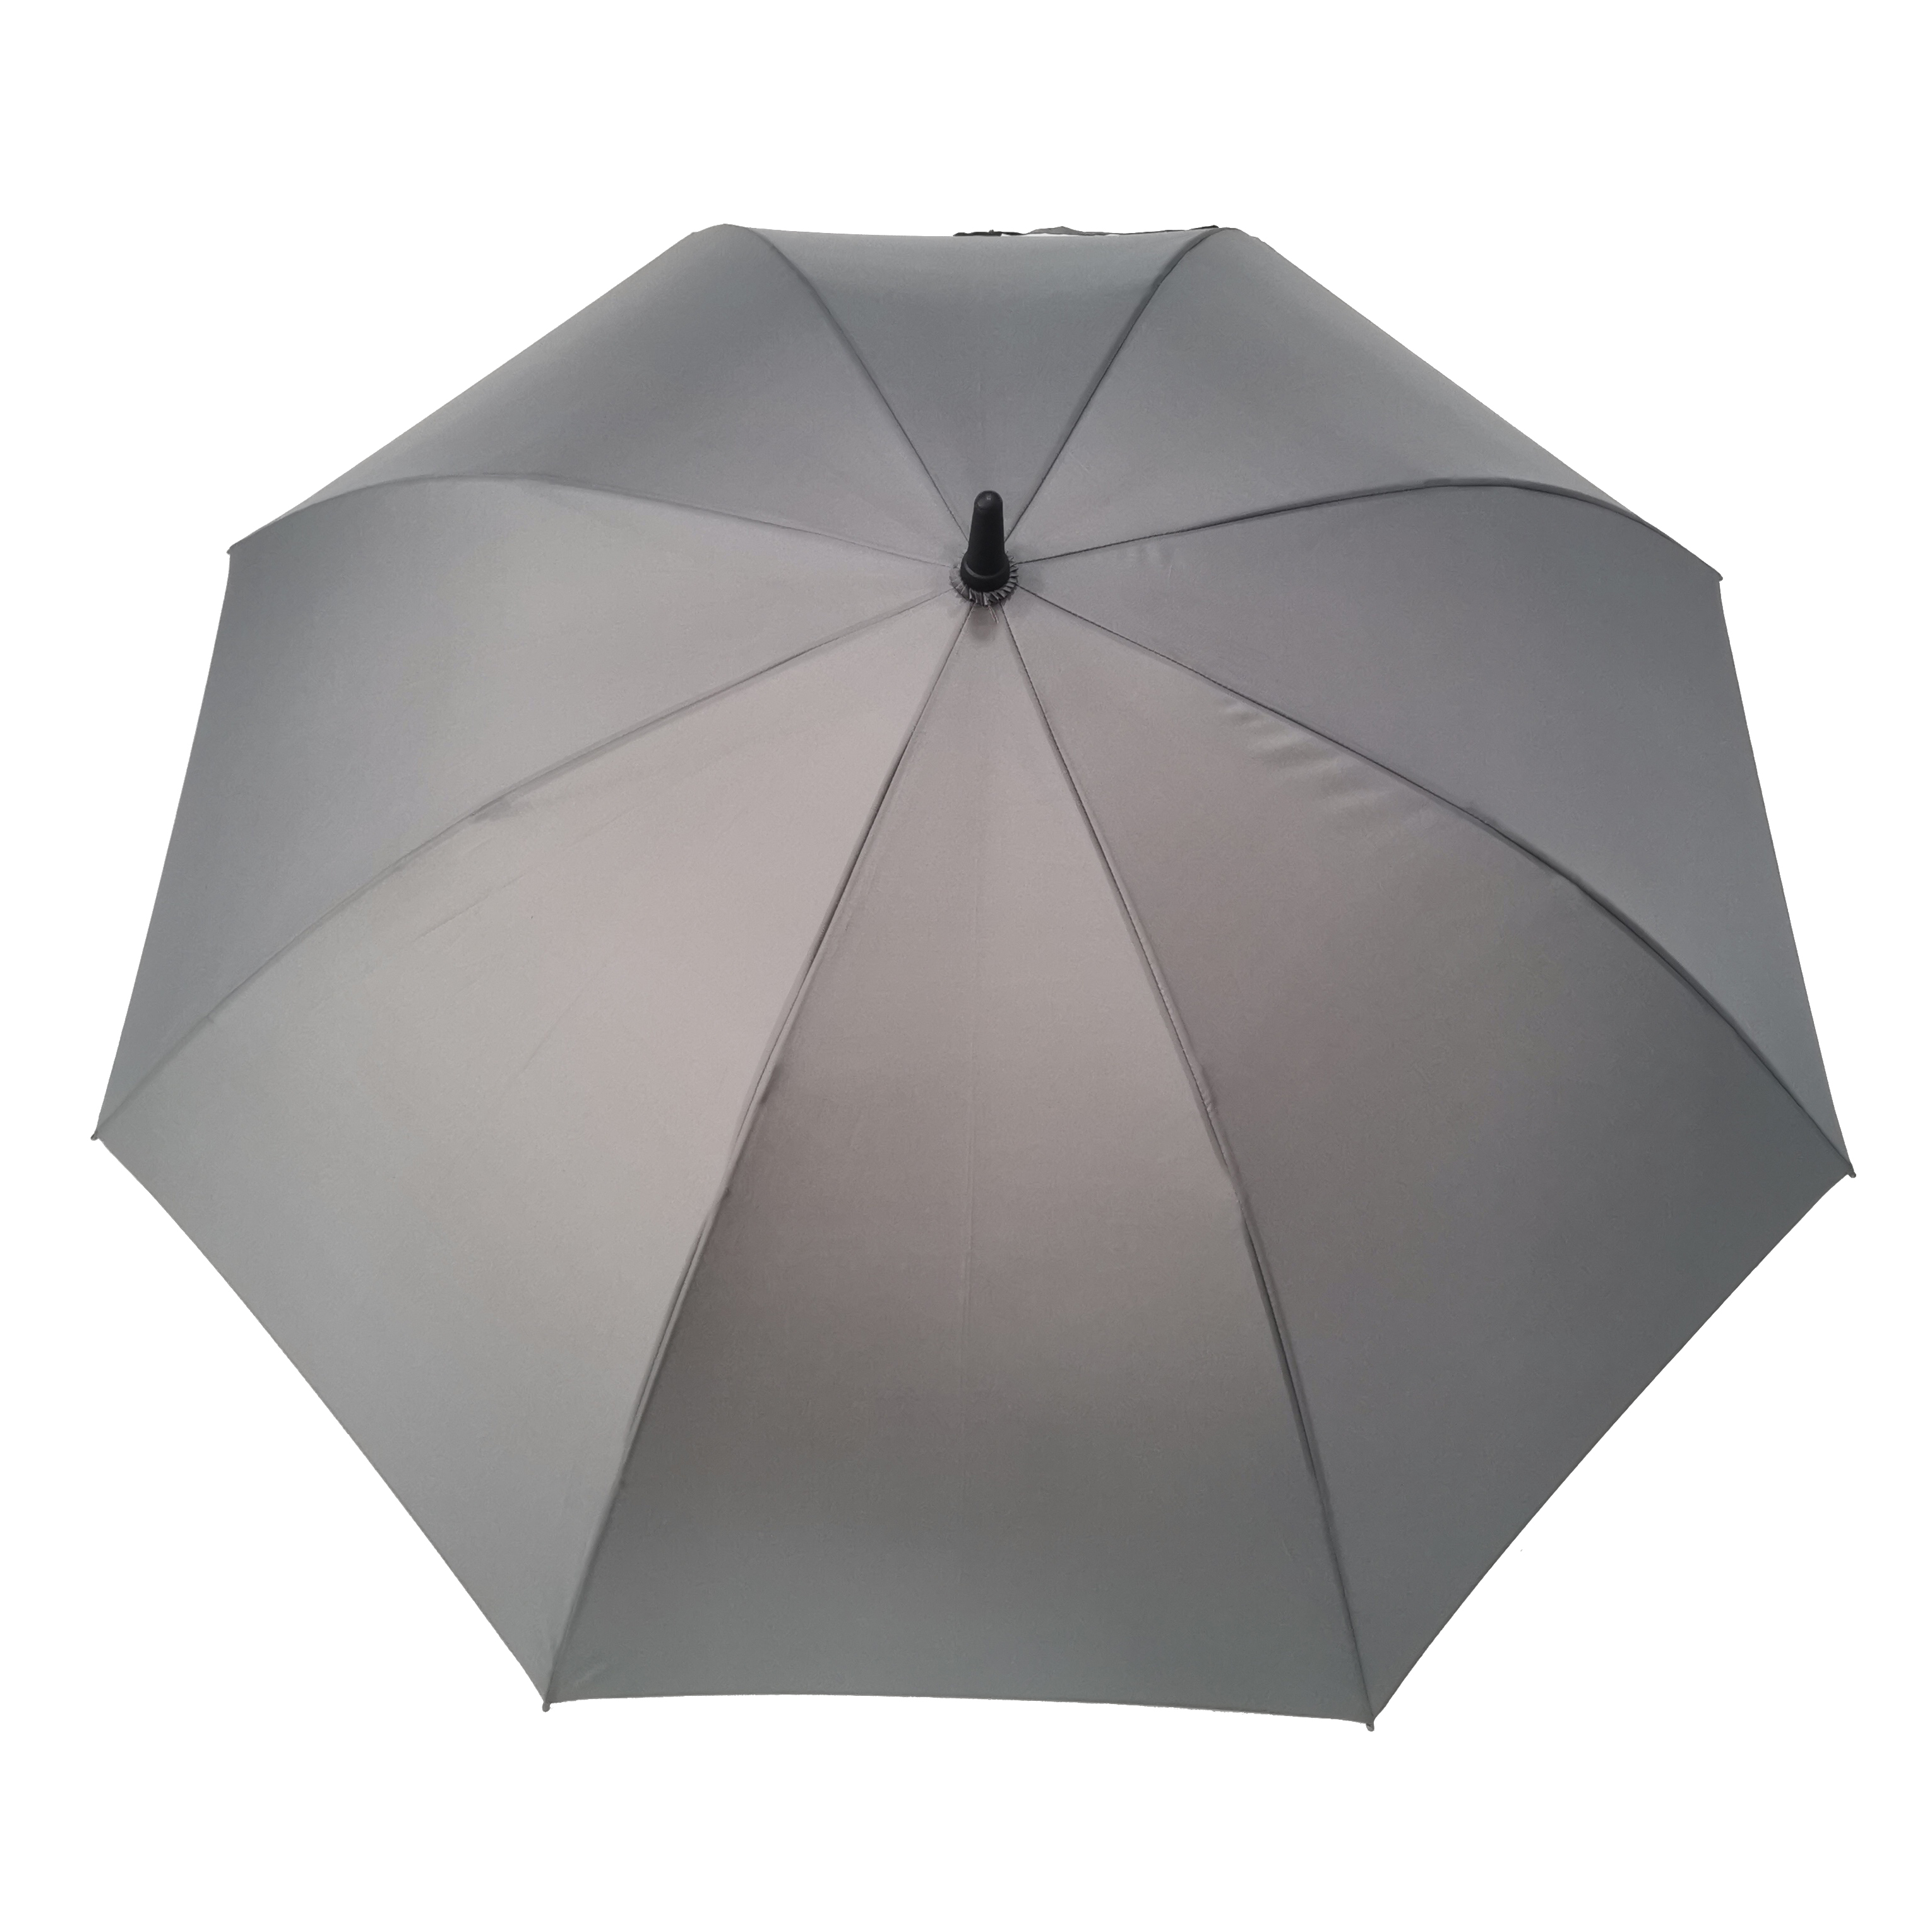 https://www.hodaumbrella.com/low-key-luxury-business-style-golf-umbrella-product/